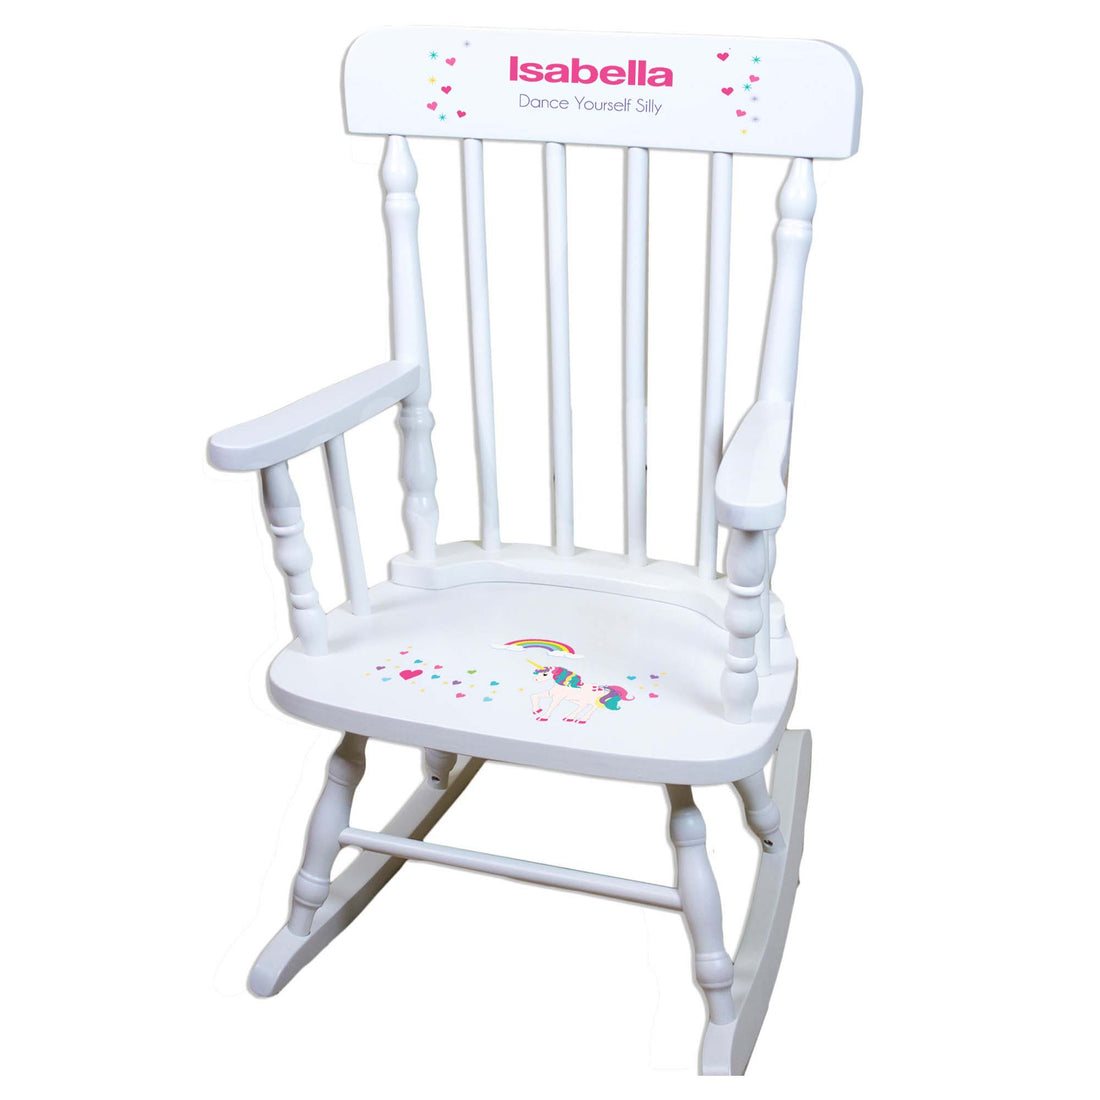 Unicorn White Personalized Wooden ,rocking chairs